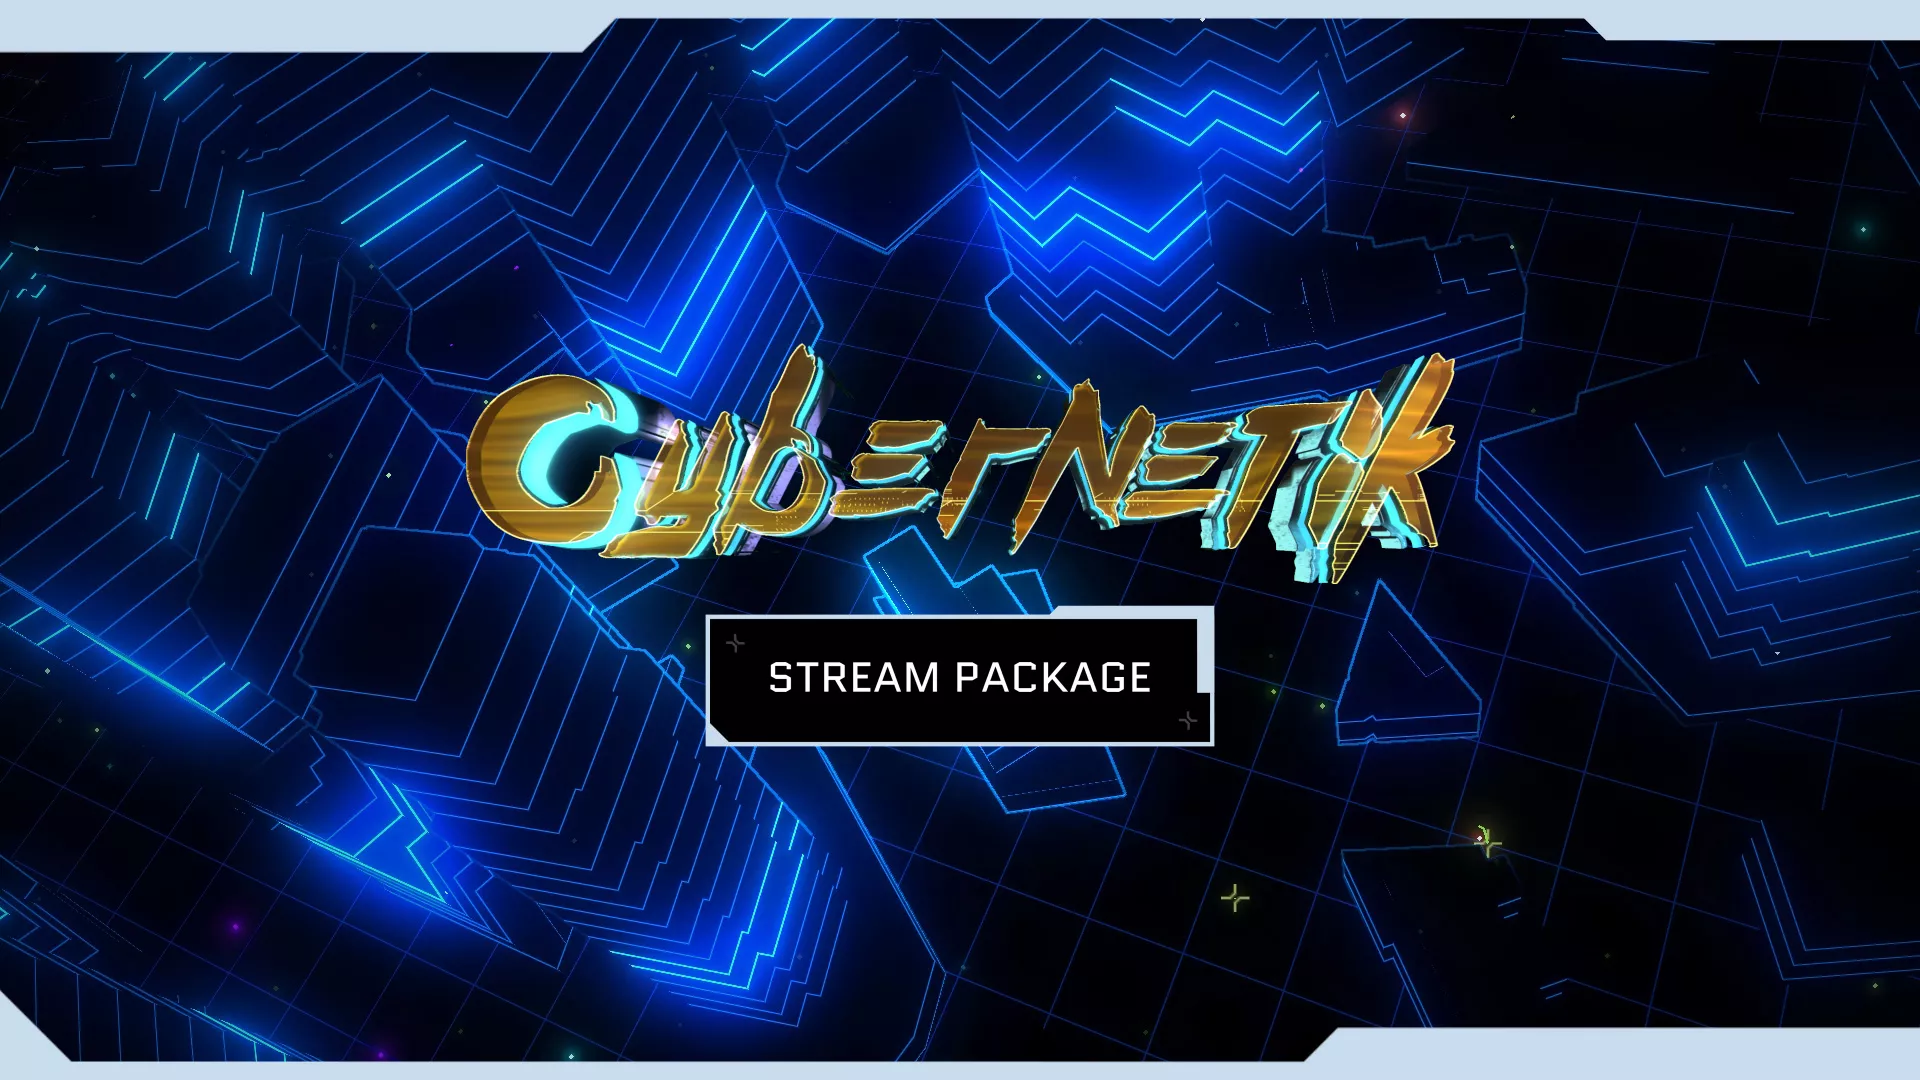 Cybernetik - Stream Package - Main Image